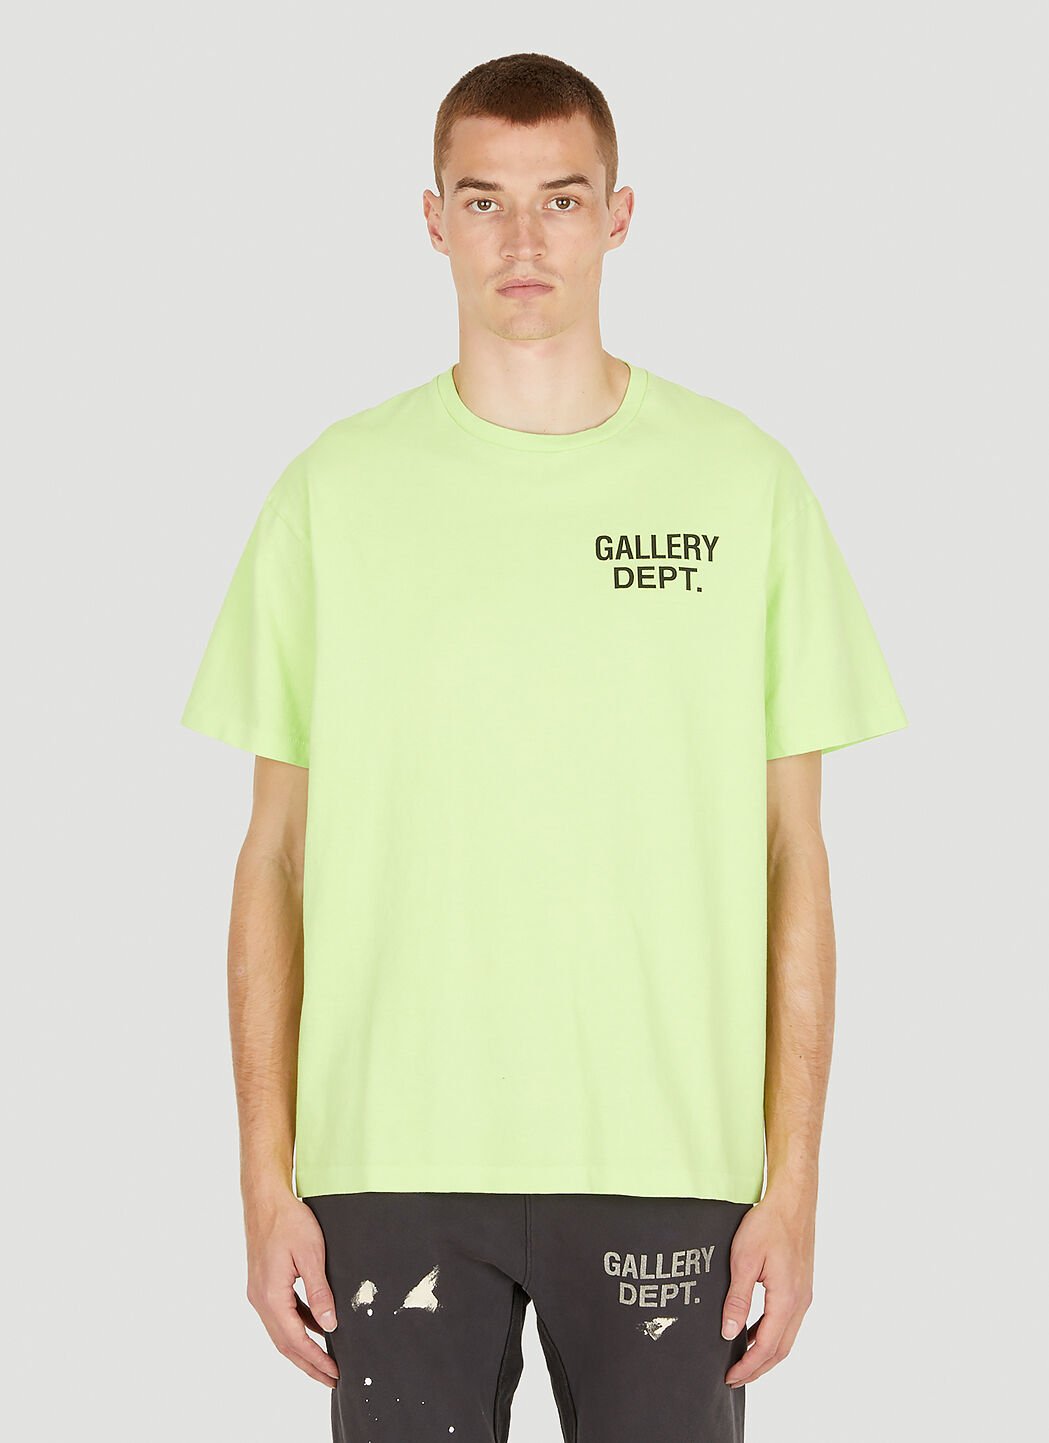 Gallery Dept. Souvenir T-Shirt White gdp0153021